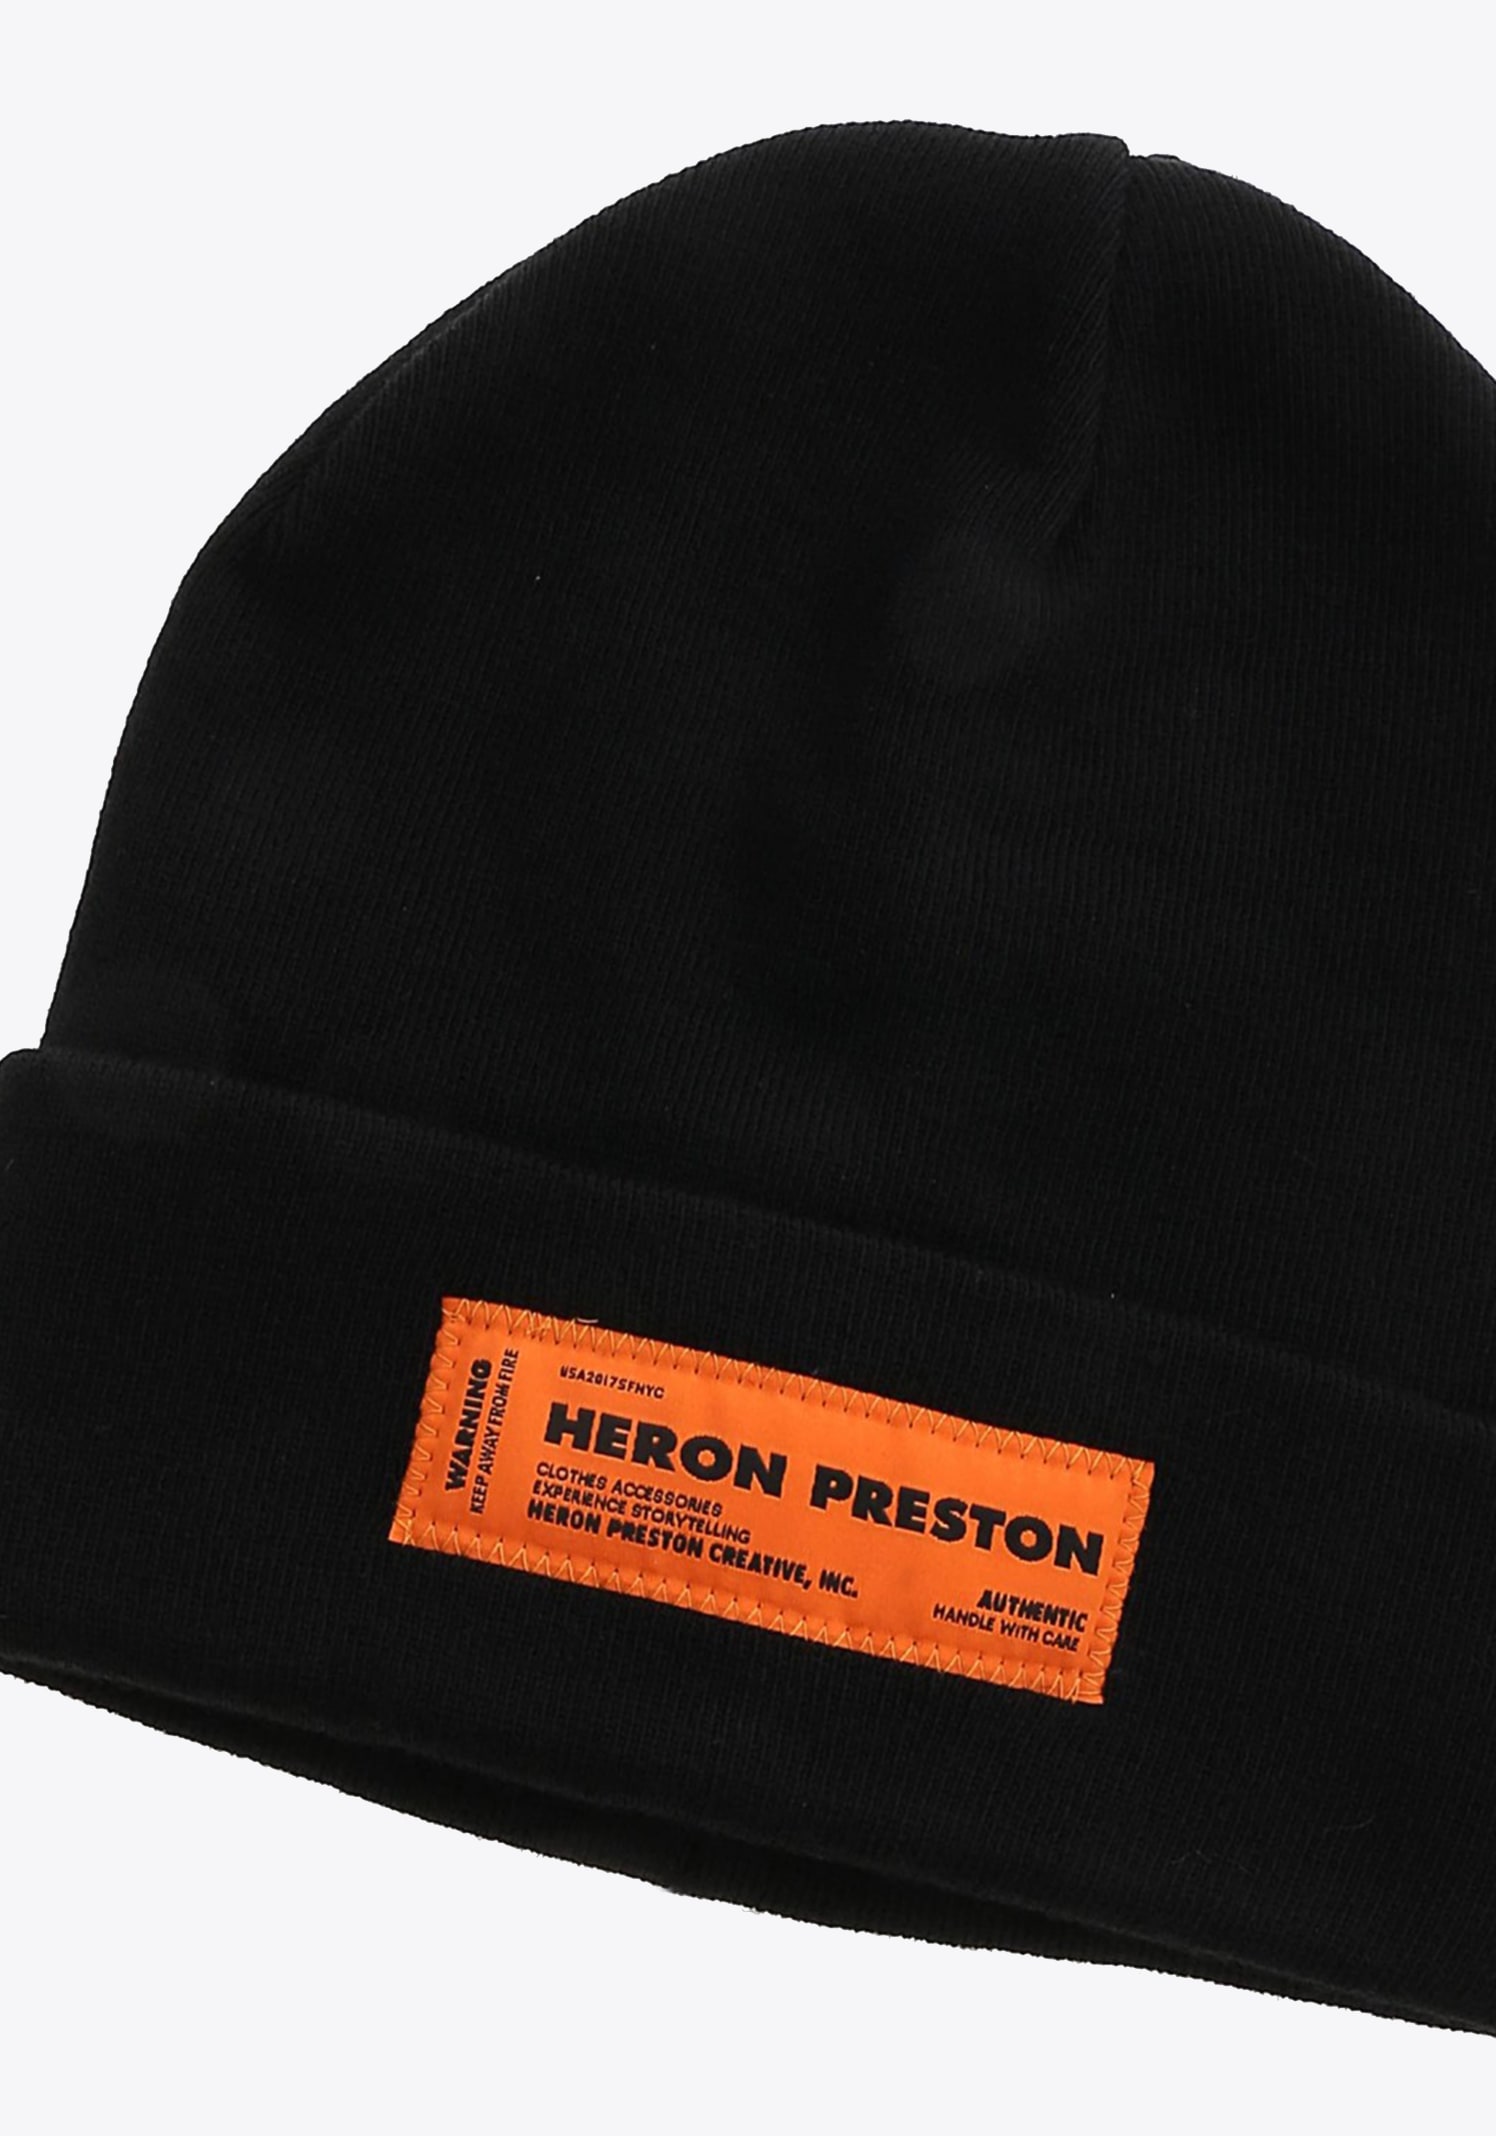 HERON PRESTON Beanie Rib knit black beanie with logo